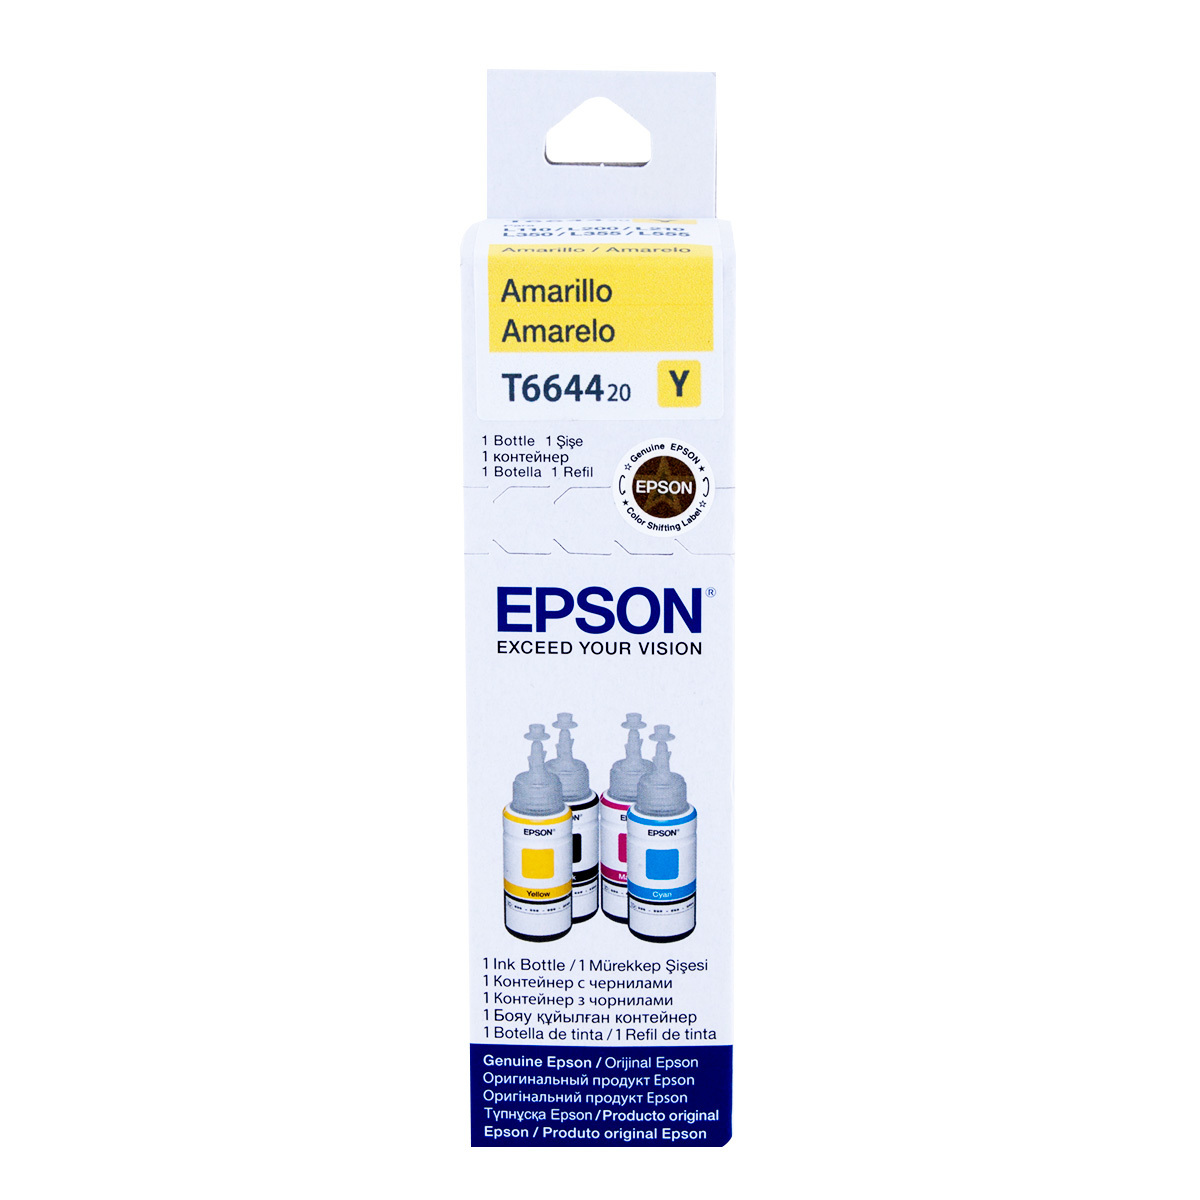 Botella de Tinta Epson T664 / T664420 AL / Amarillo / 6500 páginas / EcoTank